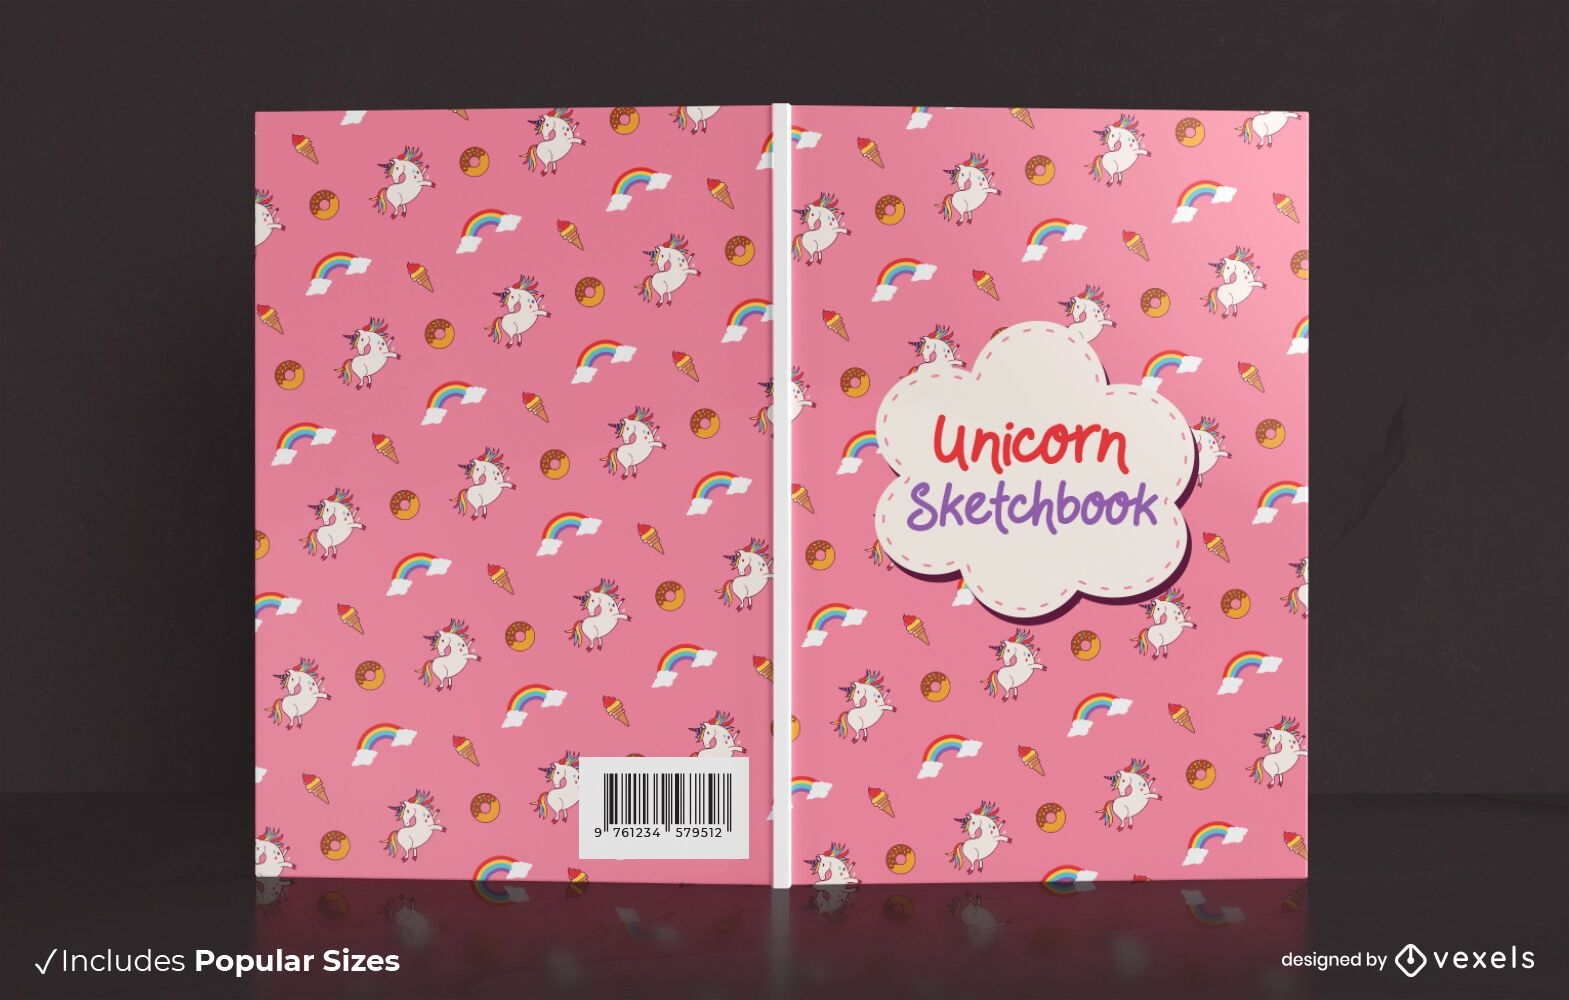 Unicorn sketchbook book cover design